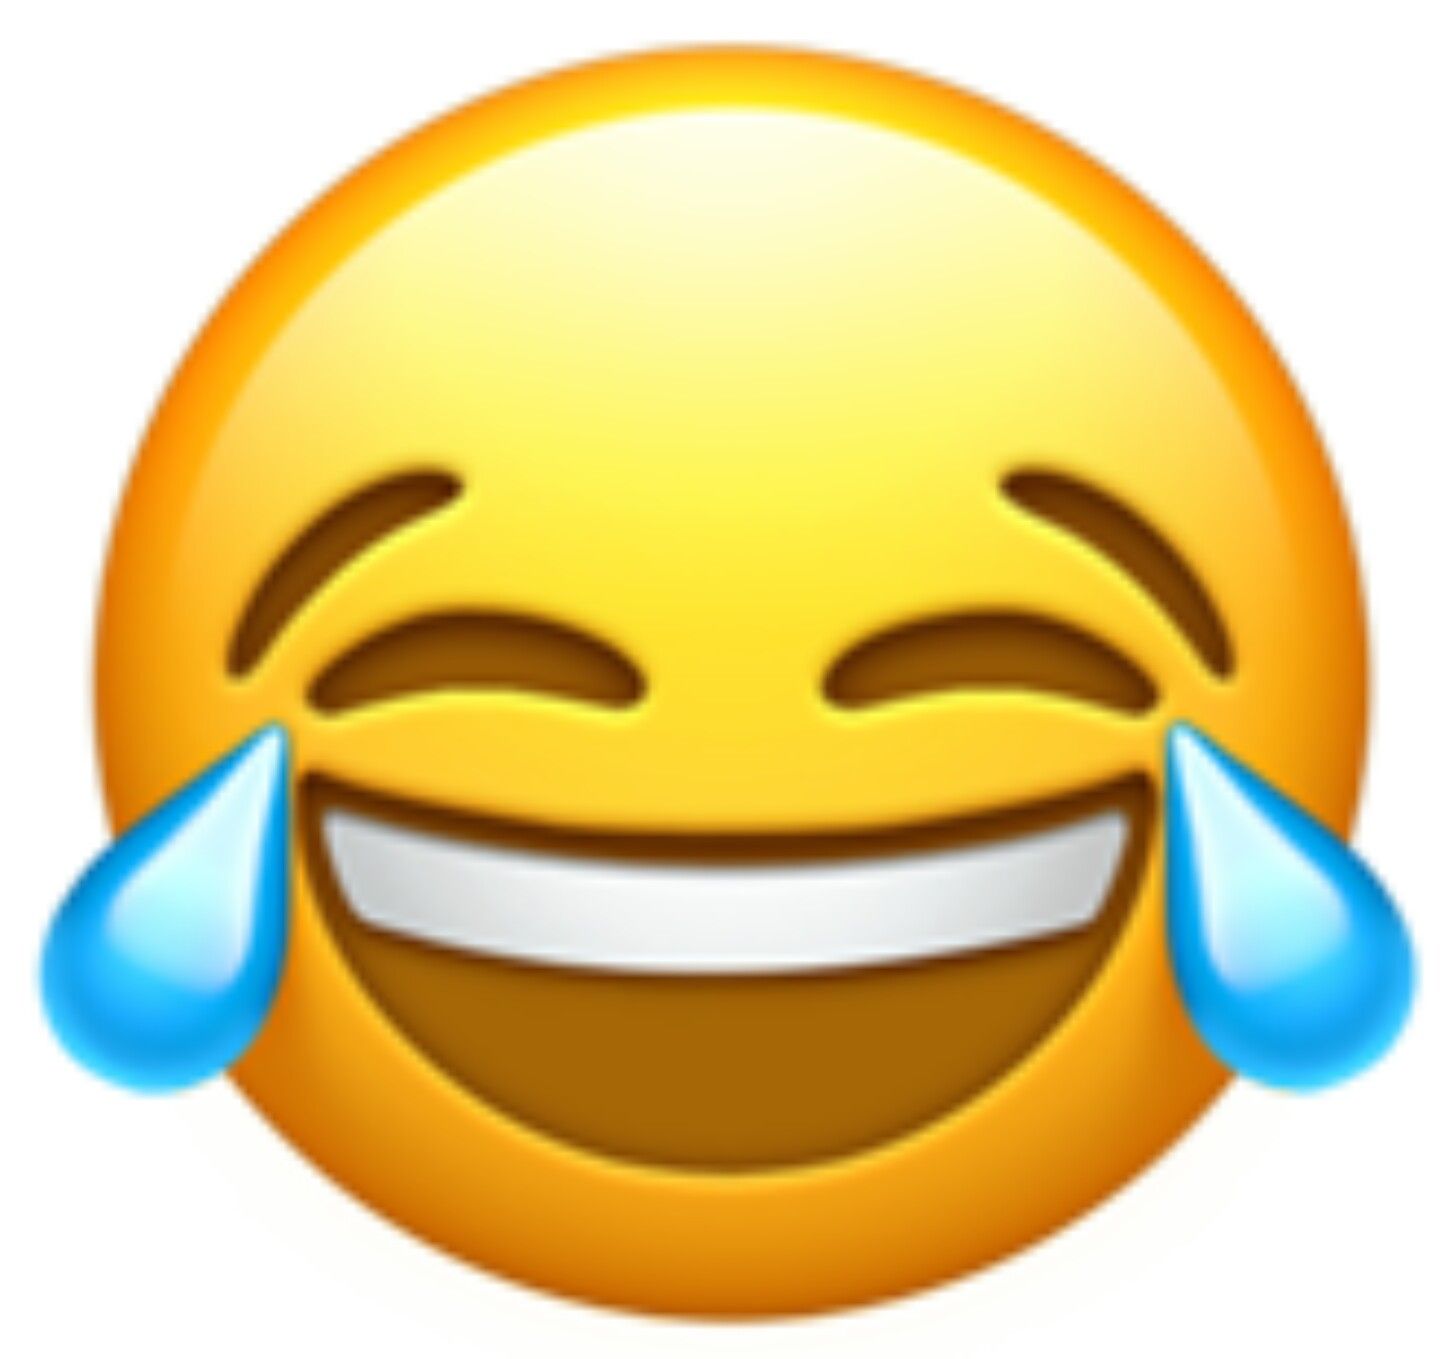 High Quality Laughing Emoji Blank Meme Template